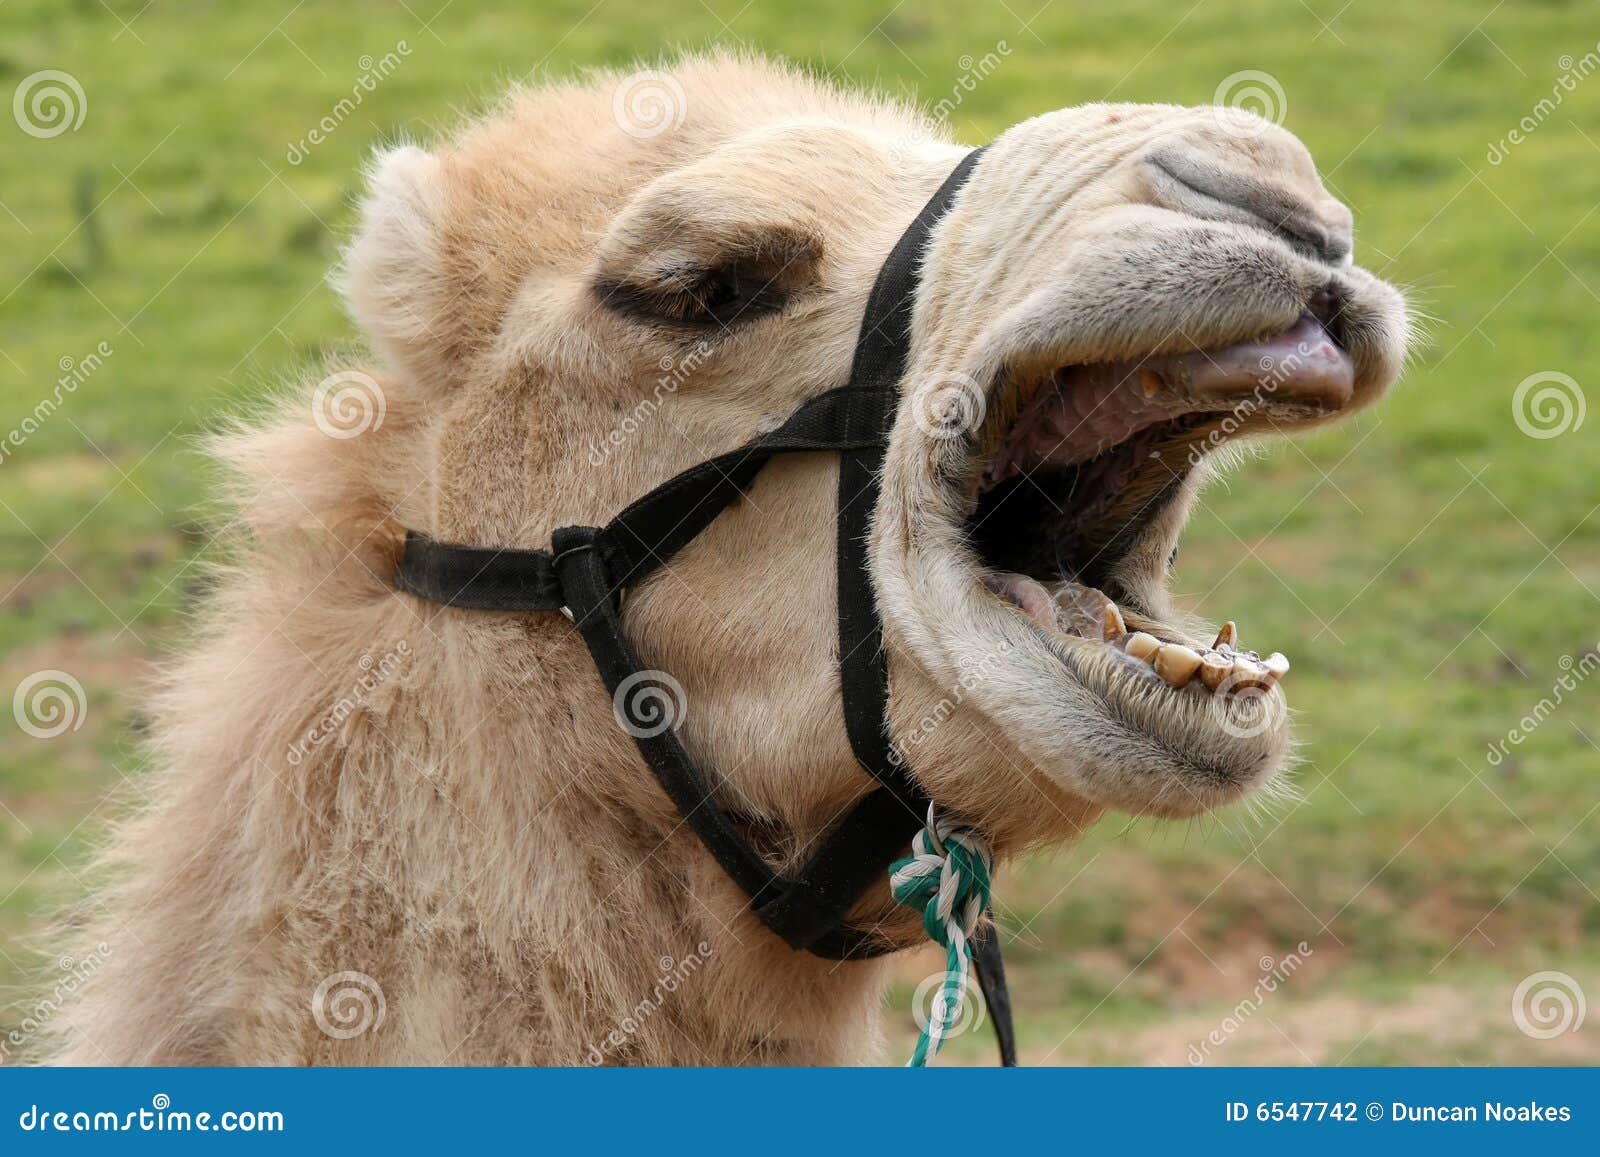 Funny Camel stock photo. Image of singing, gums, transport - 6547742